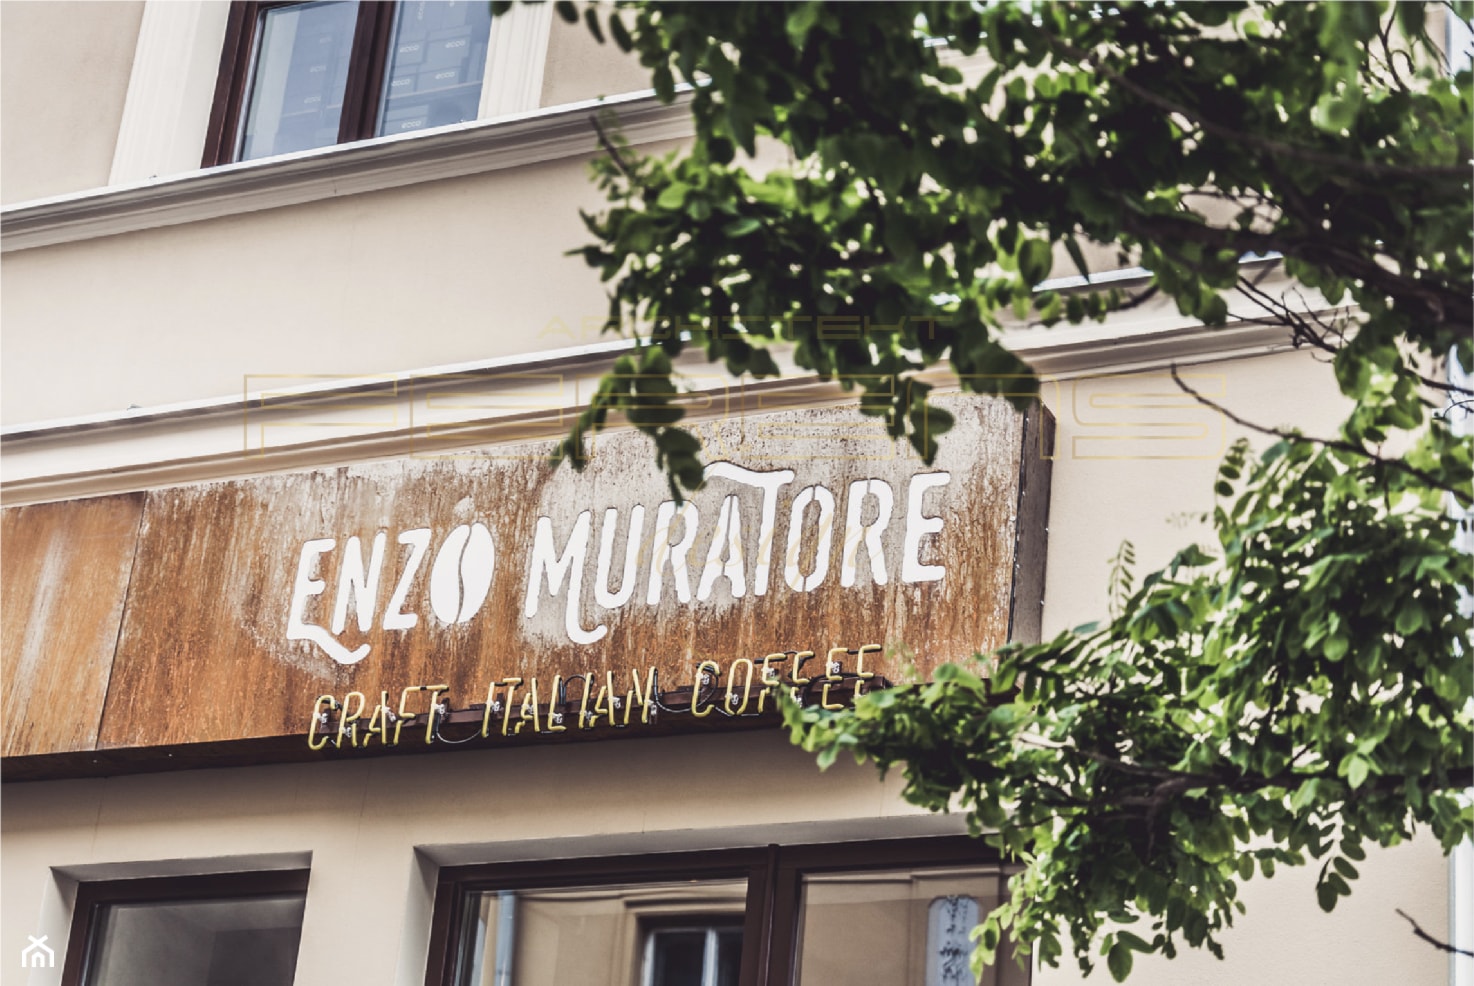 Enzo Muratore Craft Italian Coffee - zdjęcie od Joanna Ferens Hofman Ferens design - Homebook